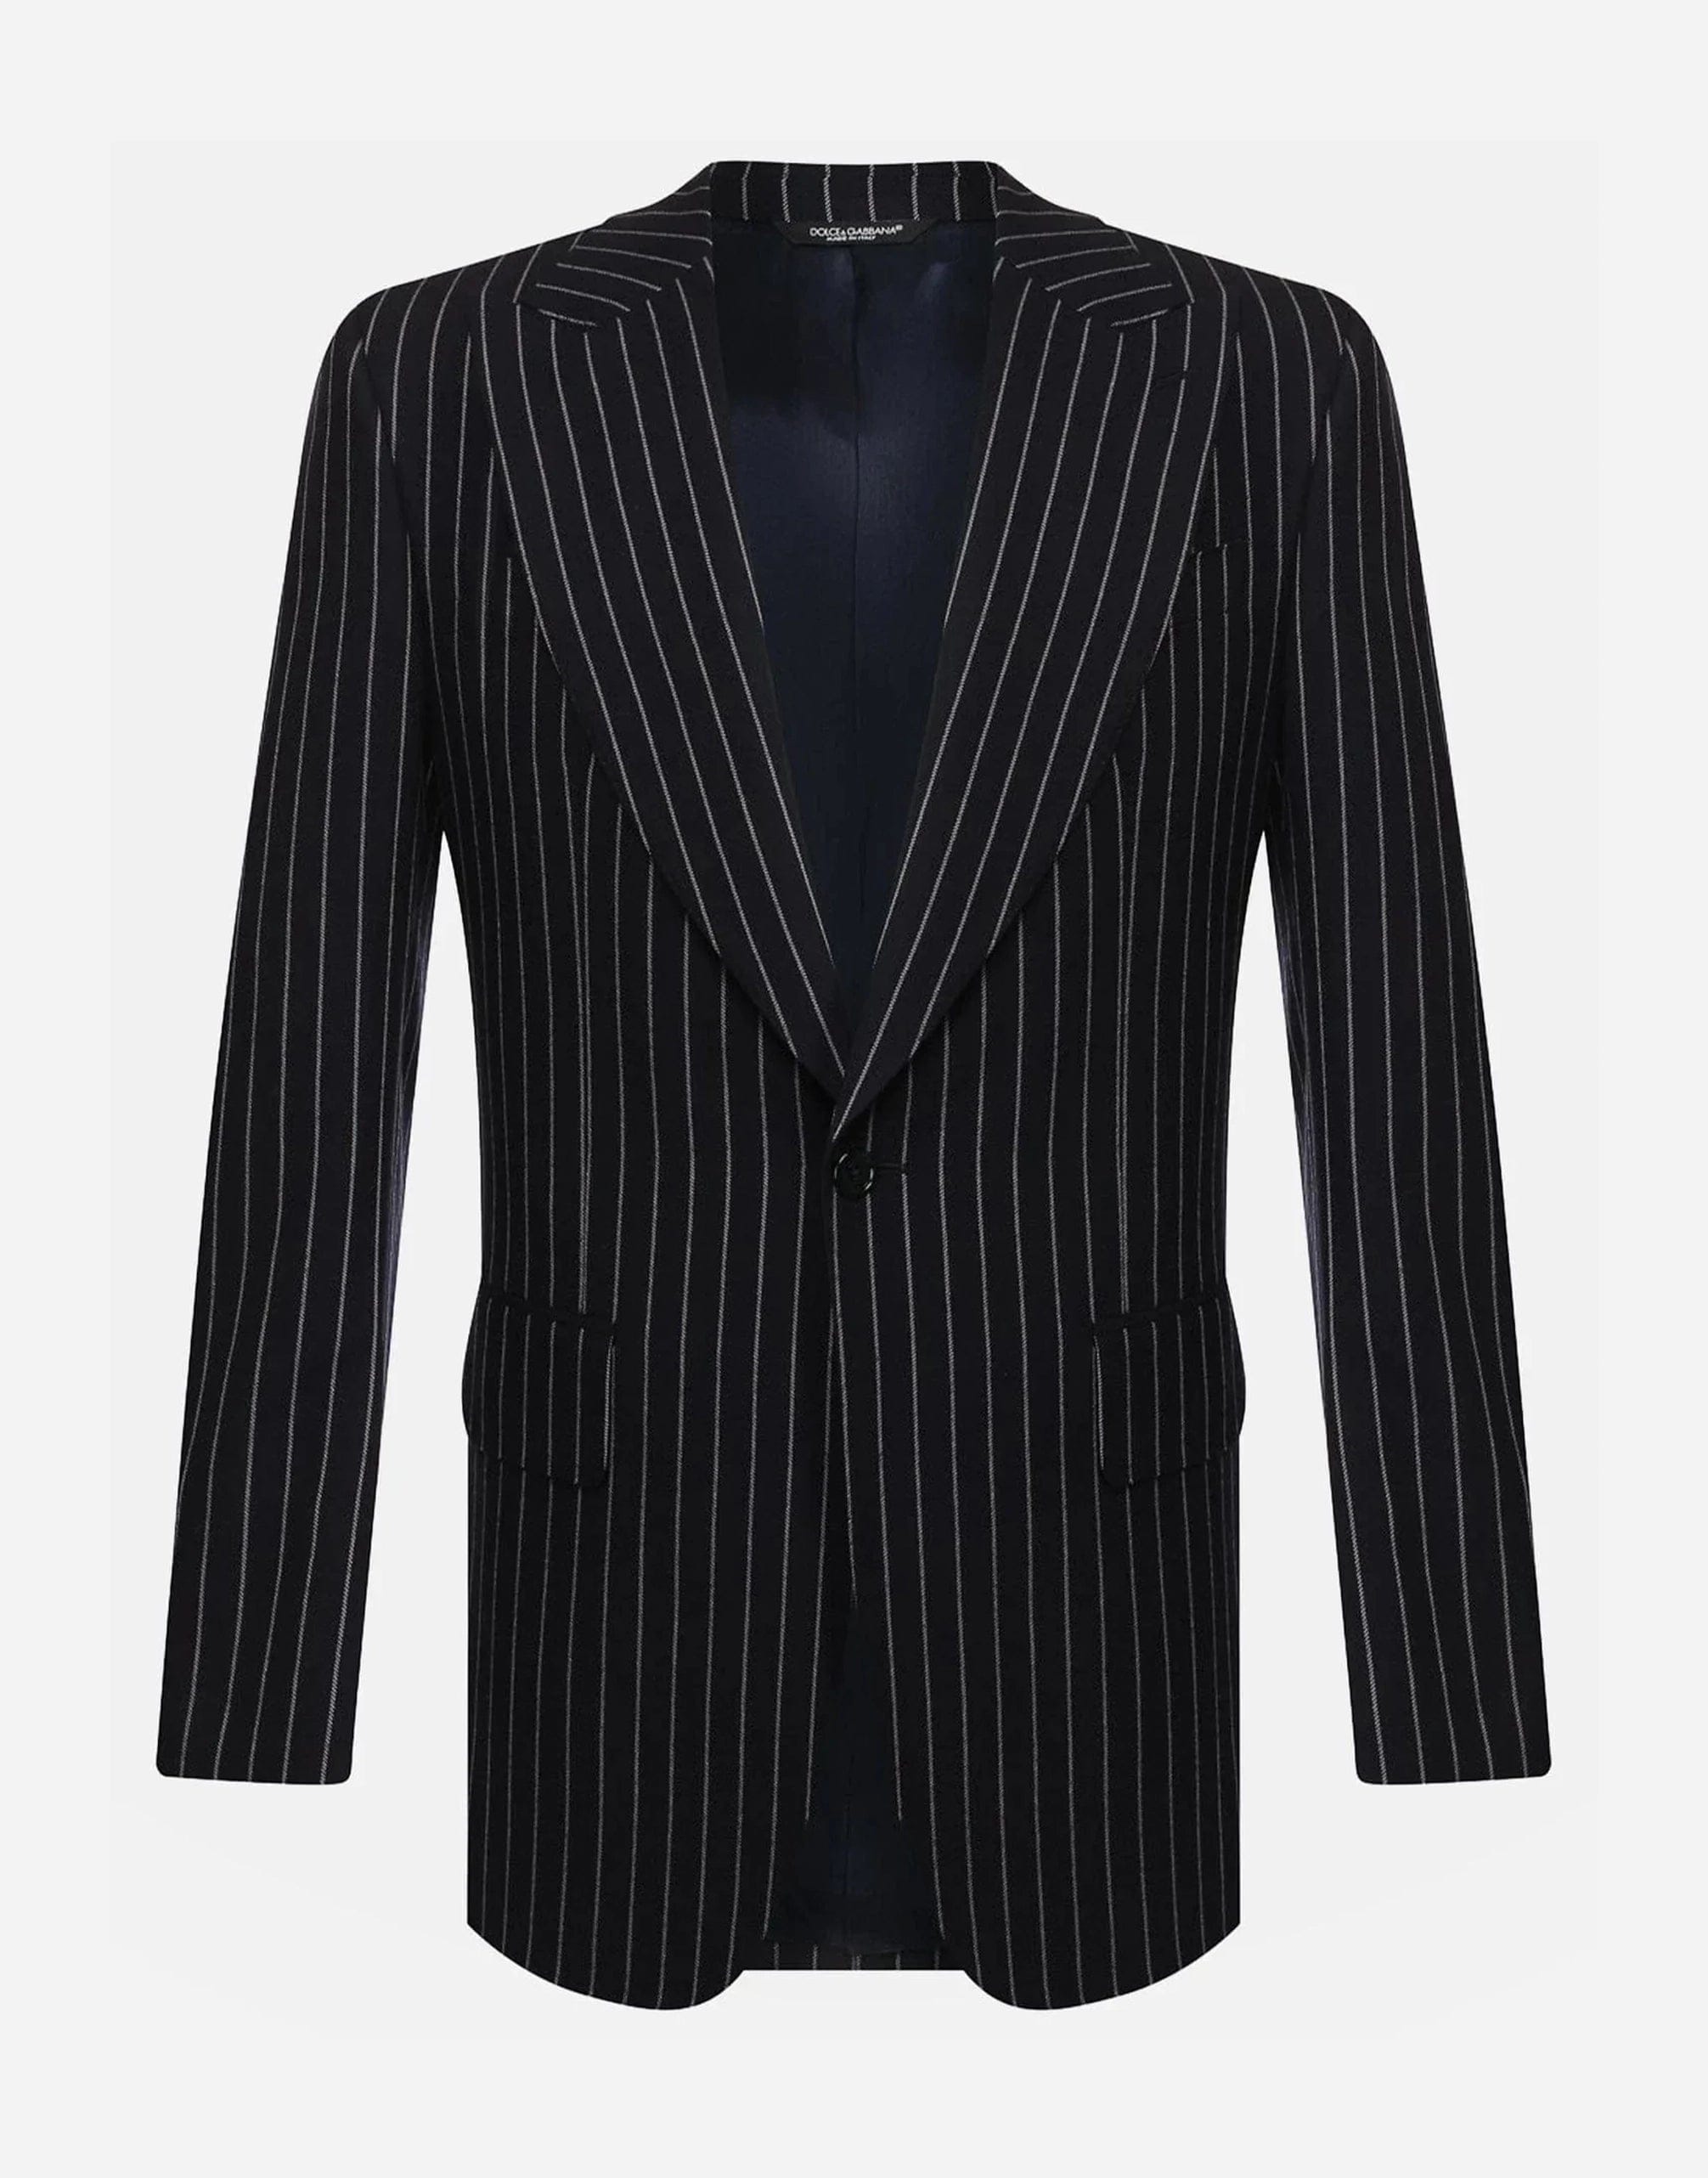 Dolce & Gabbana Pinstripe Suit Jacket